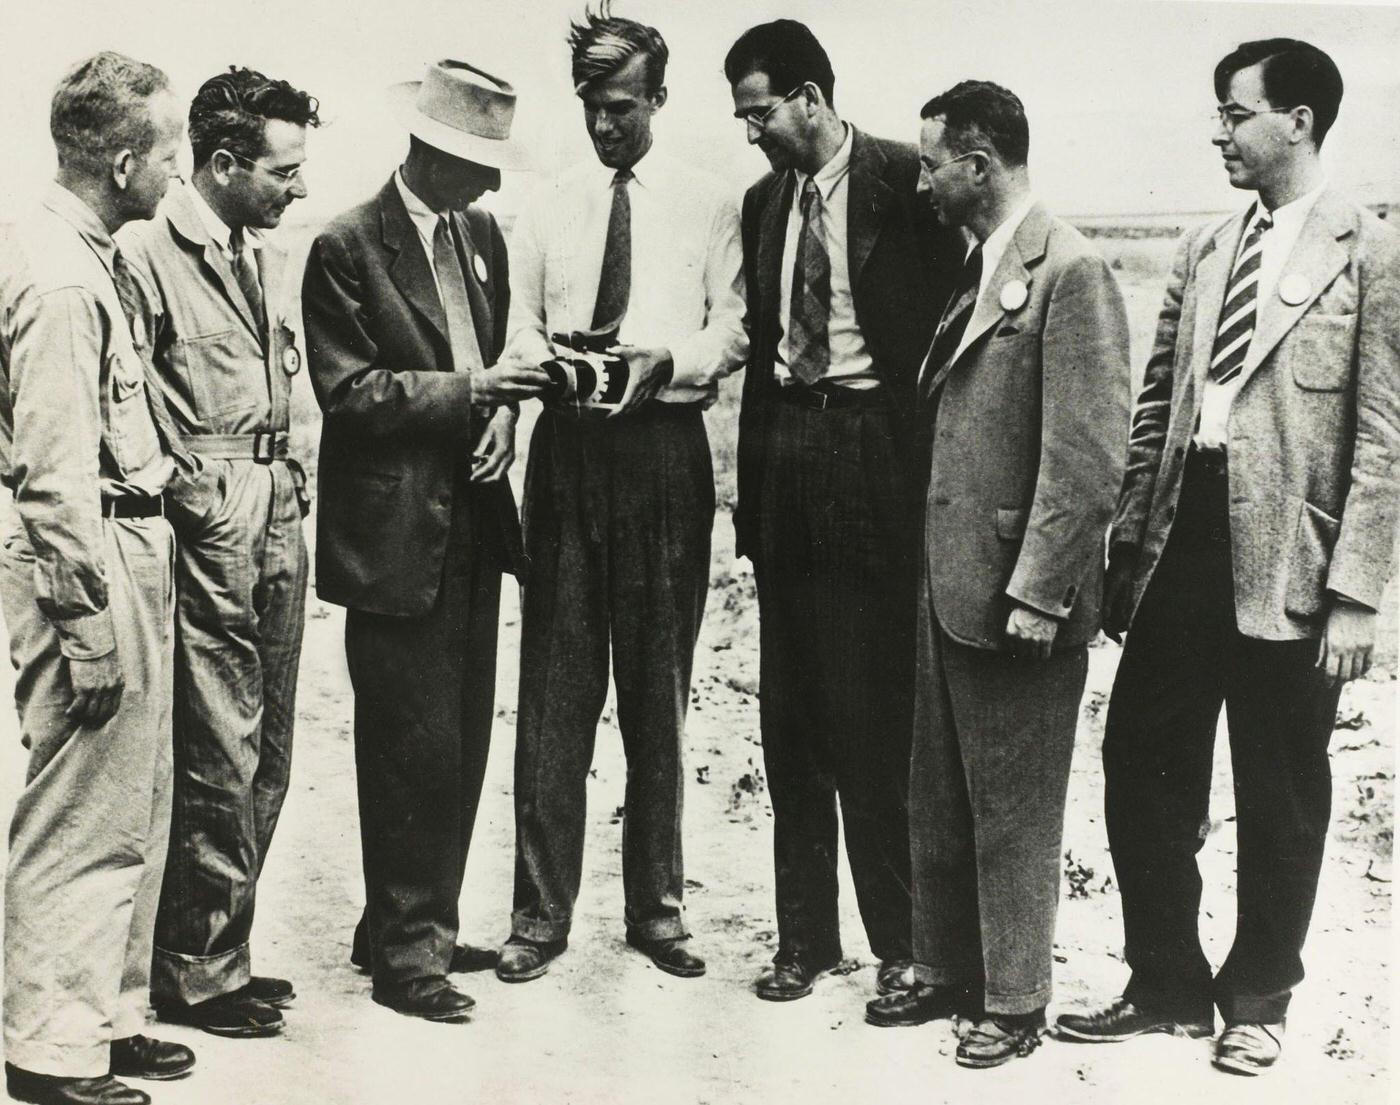 Scientists At Alamogordo, Trinity atom bomb explosion site, 1945